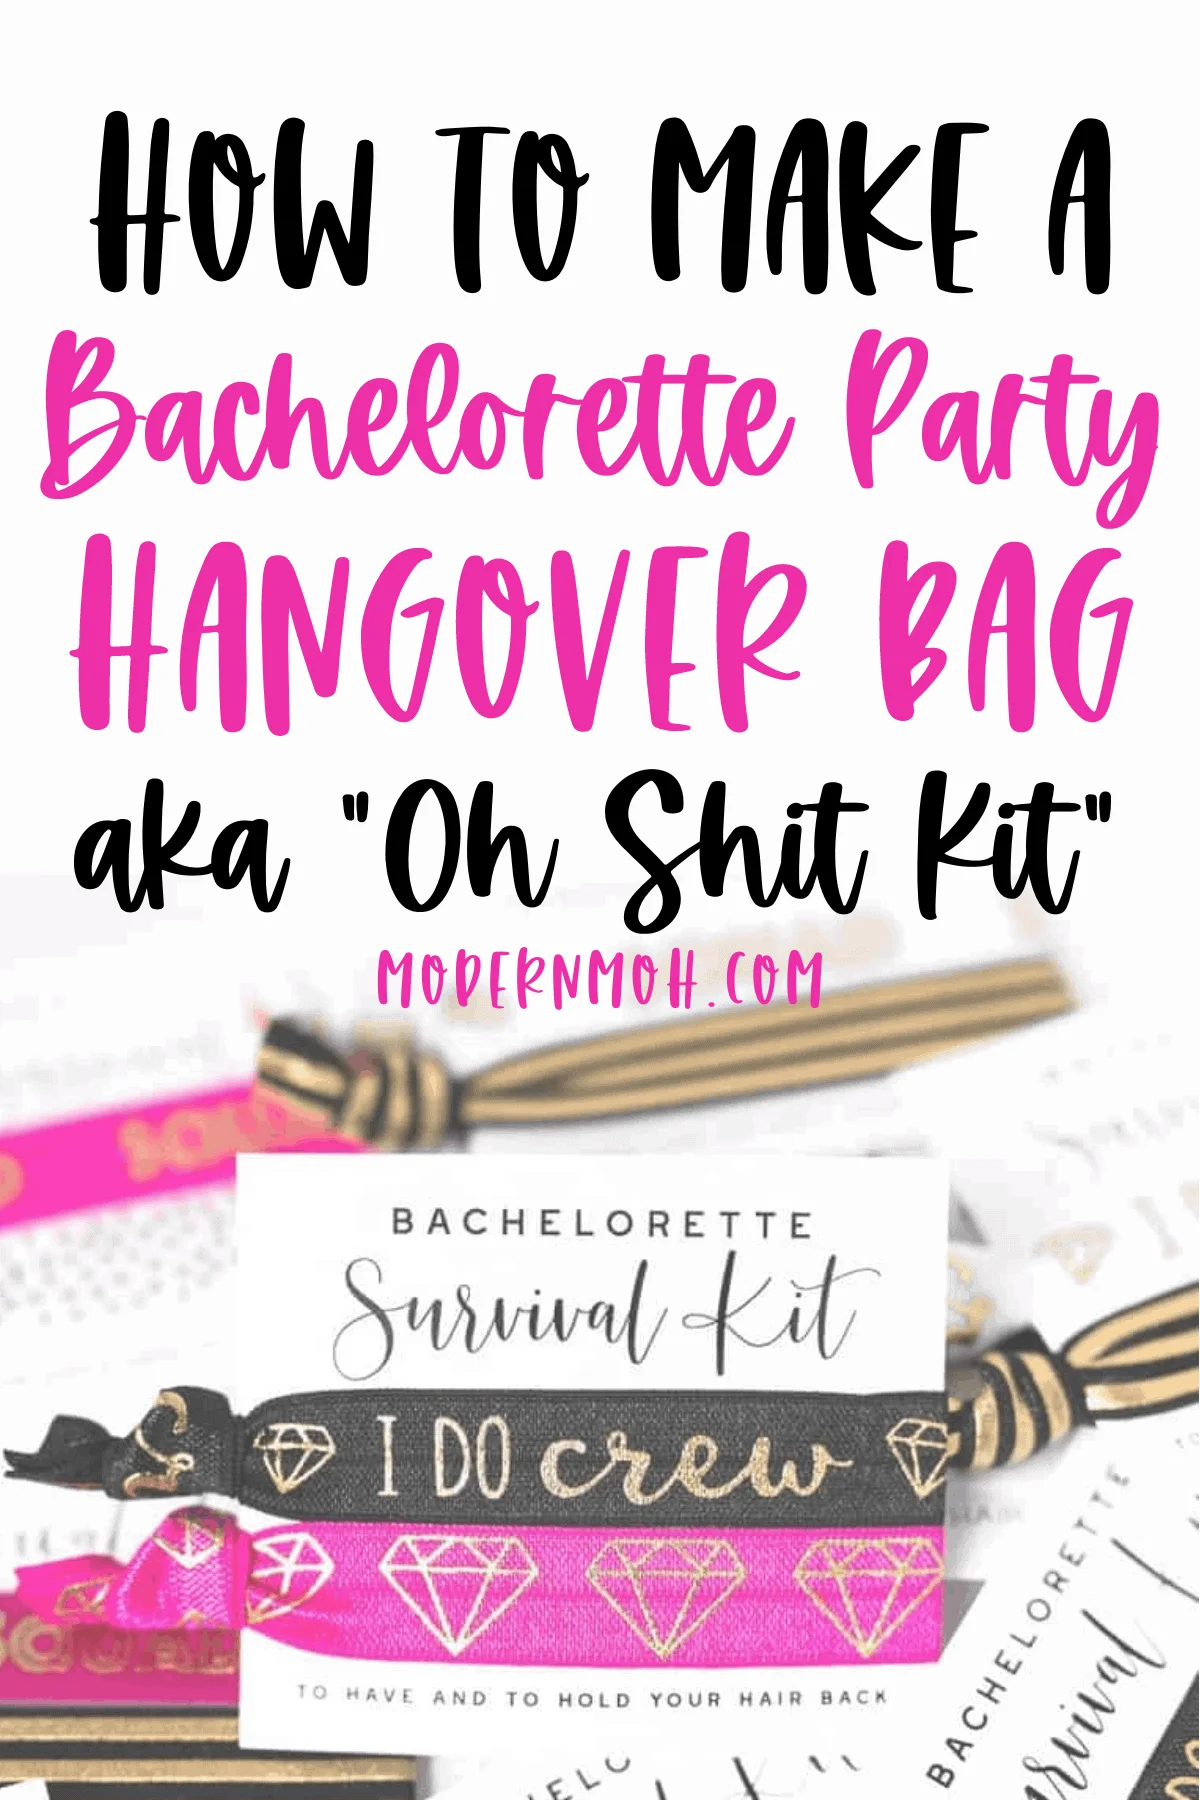 Bachelorette Emergency Kit 